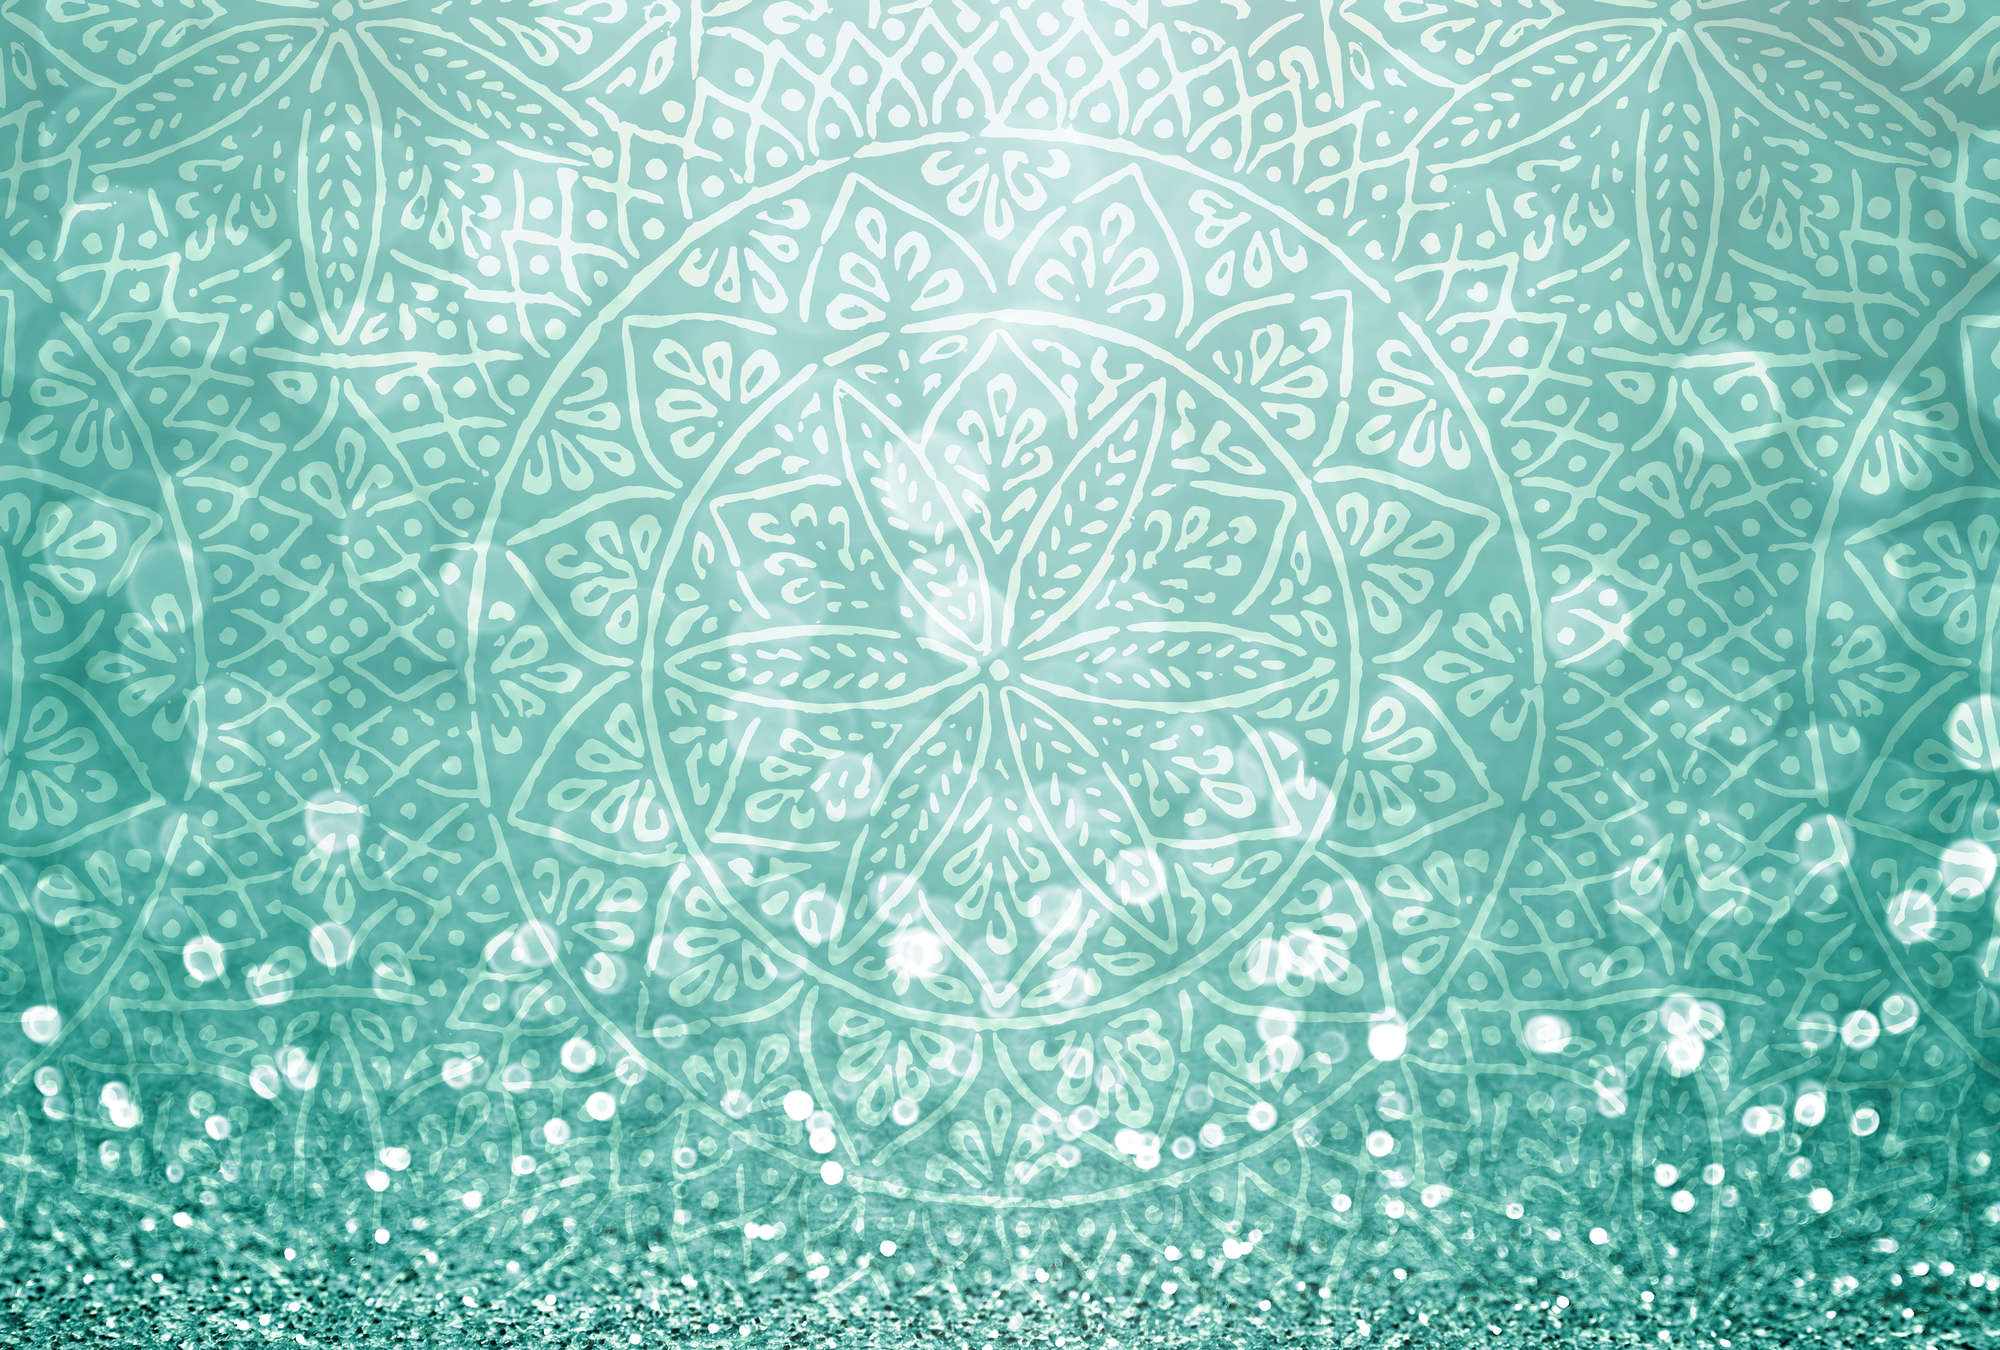             Turquoise photo wallpaper with glitter & boho design - green, white
        